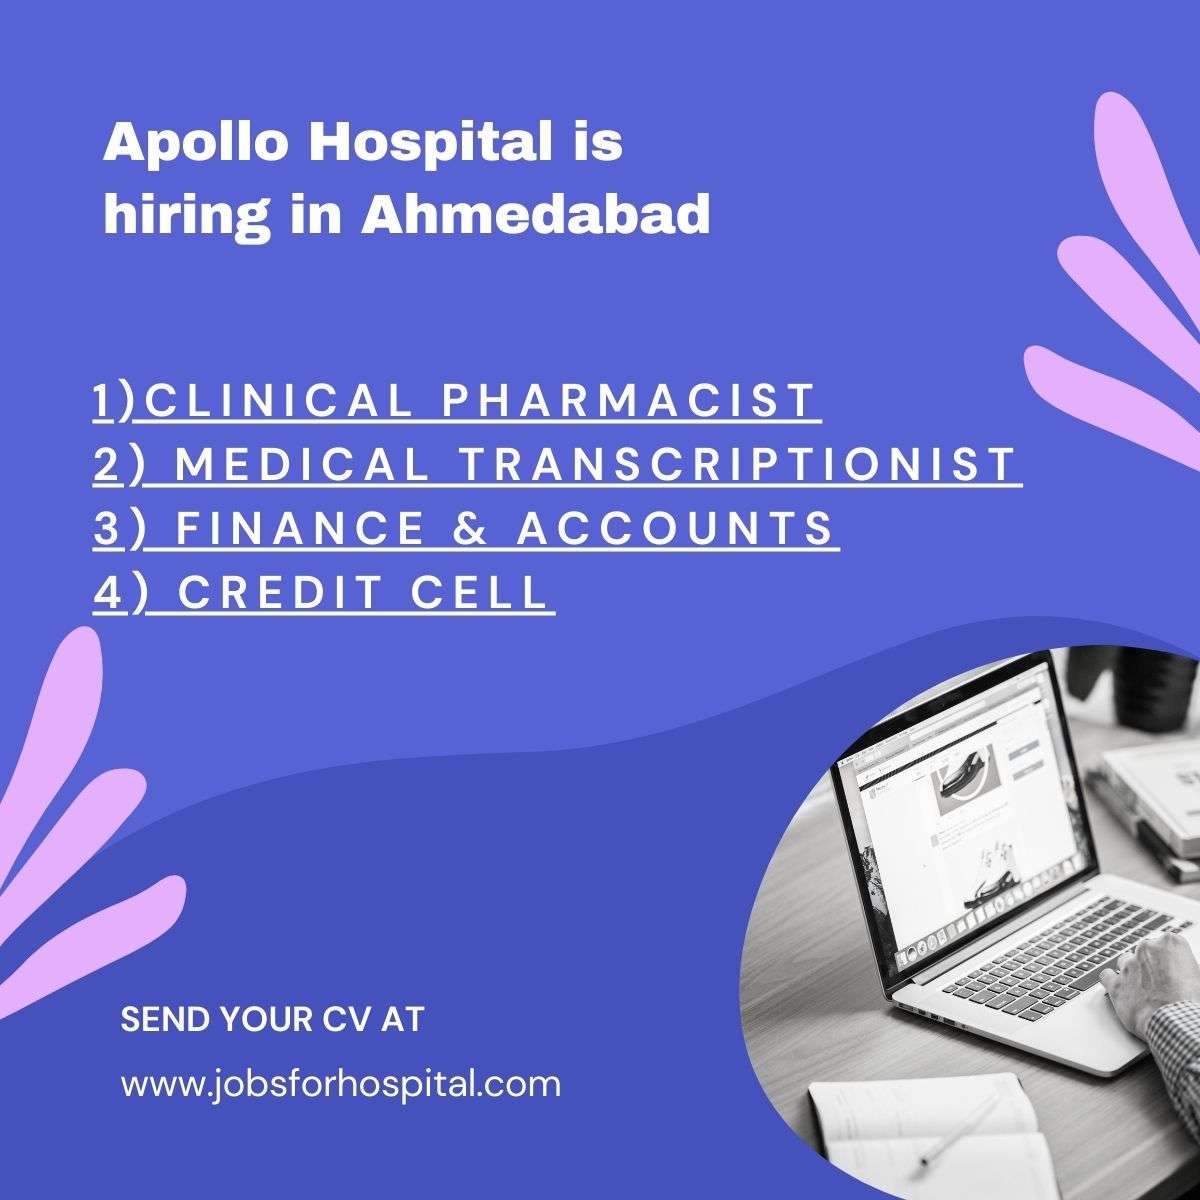 Apollo Hospital is hiring in Ahmedabad